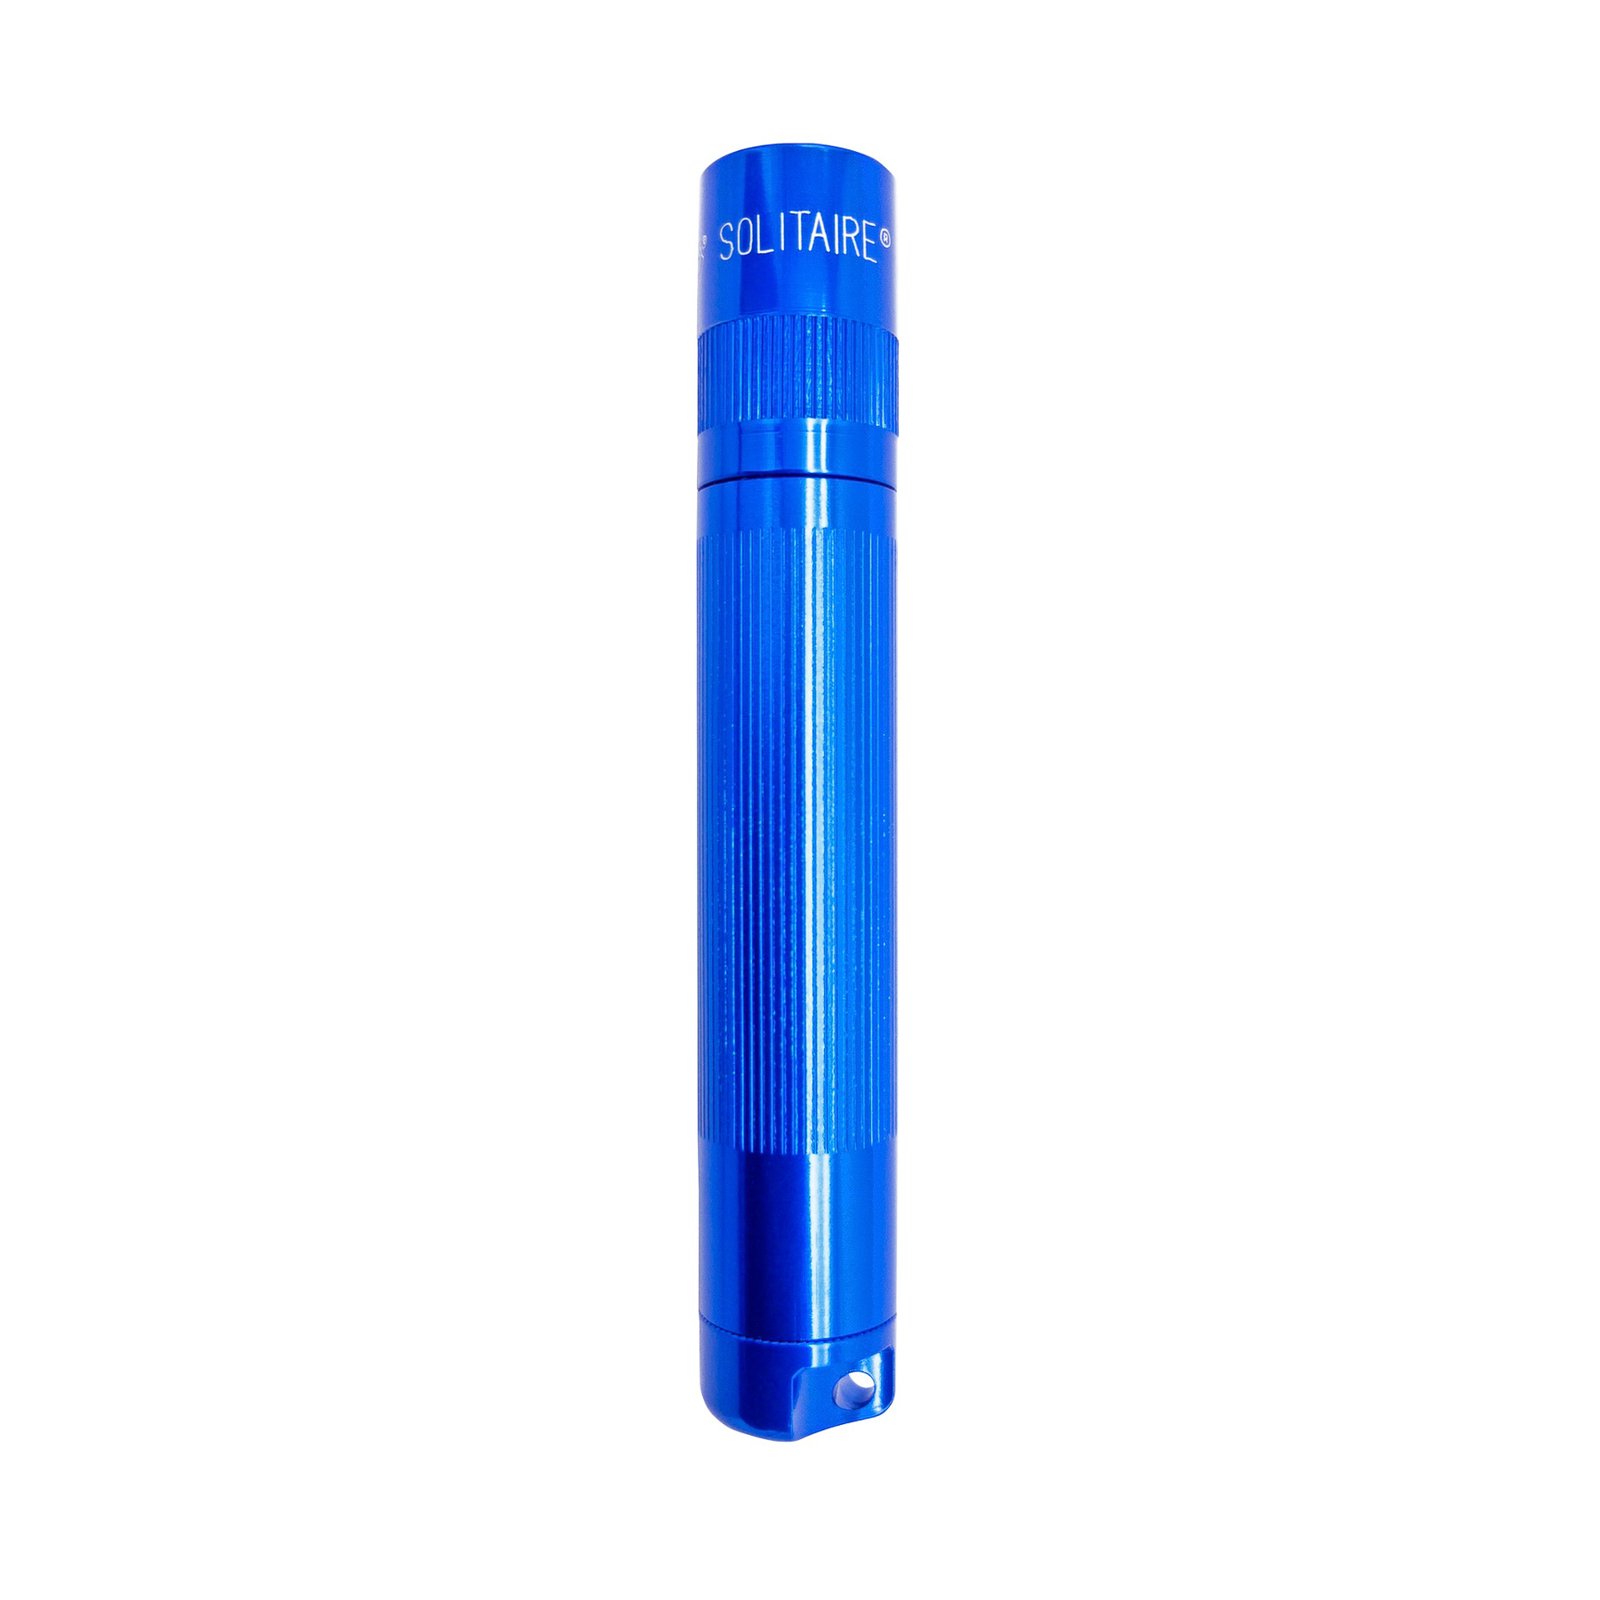 Maglite Xenonová svítilna Solitaire 1-Cell AAA, krabička, modrá